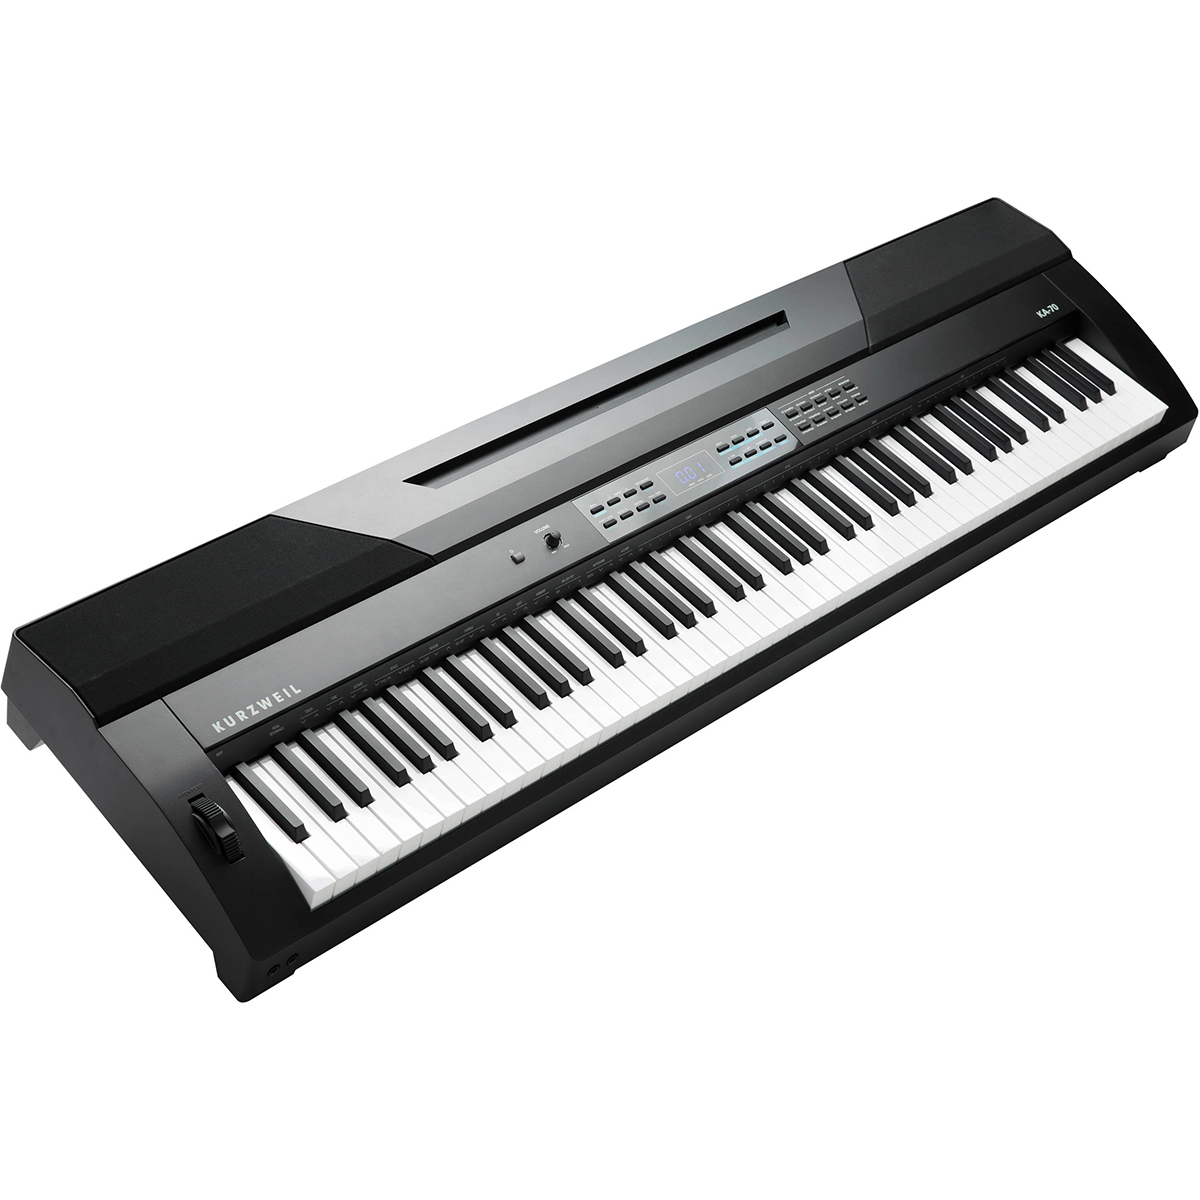 KURZWEIL KA70LB: Portable Digital Piano With 88 Spring Action Keys